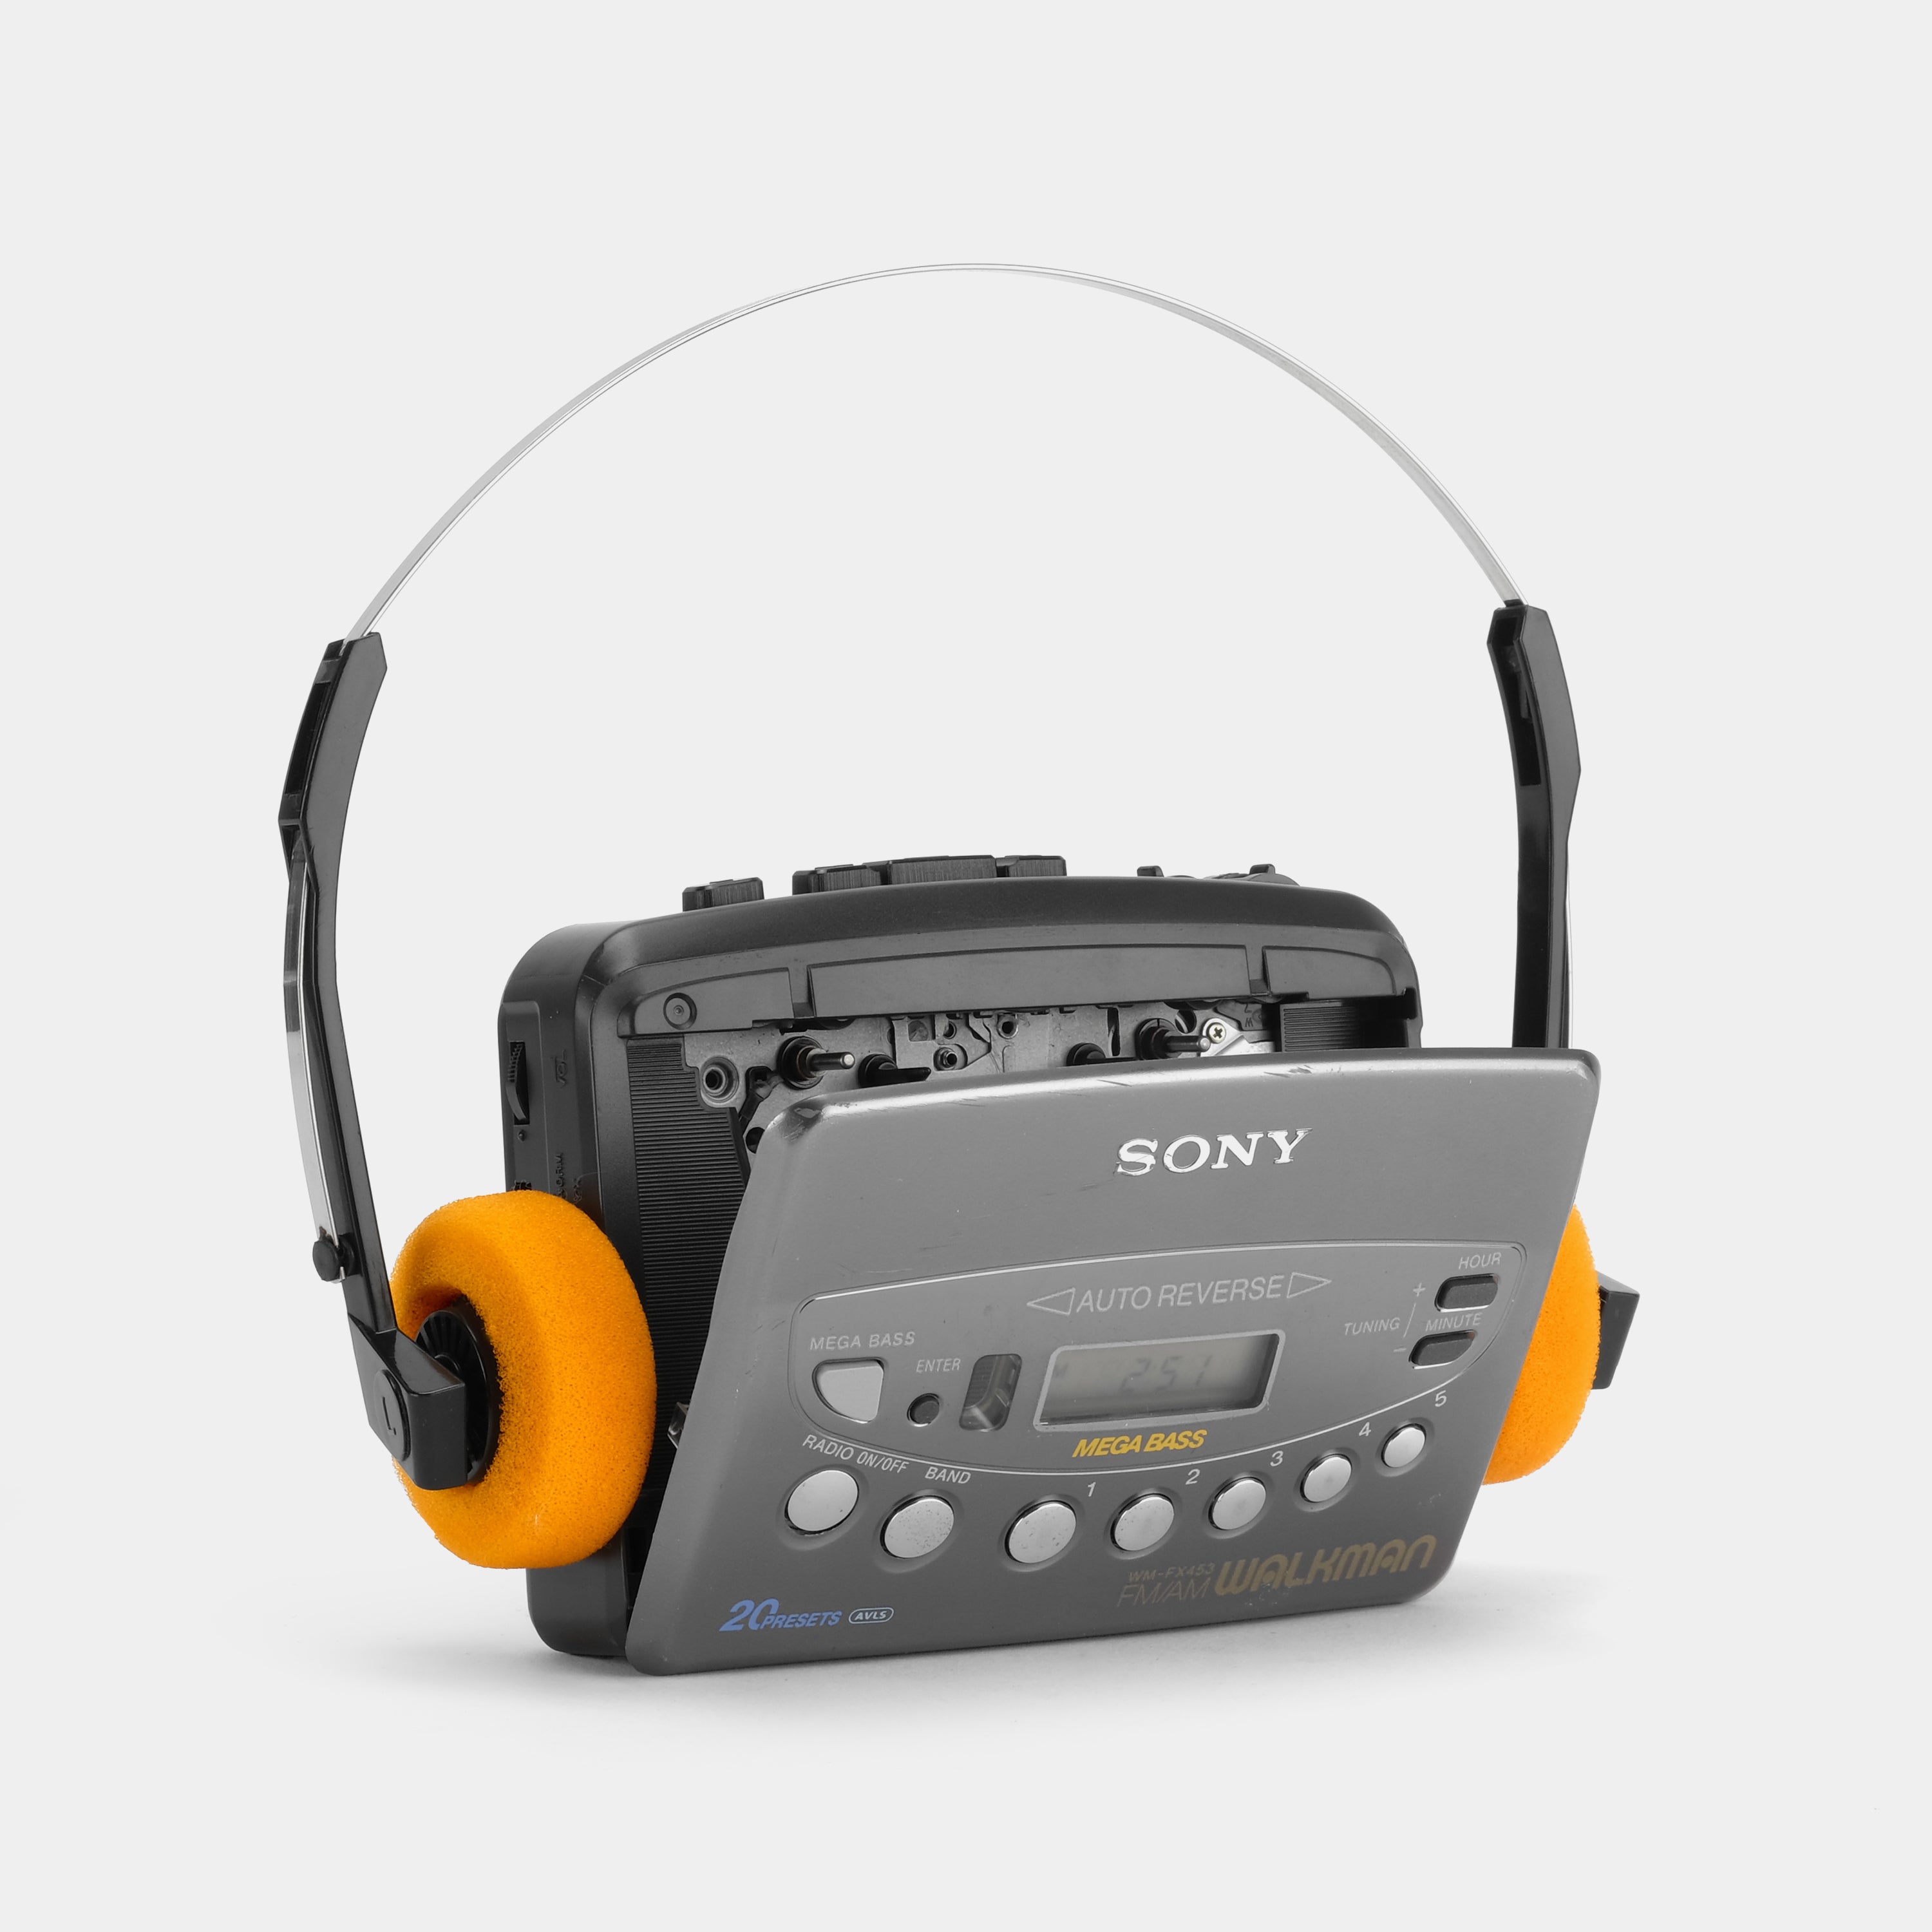 Sony Walkman - Electronics